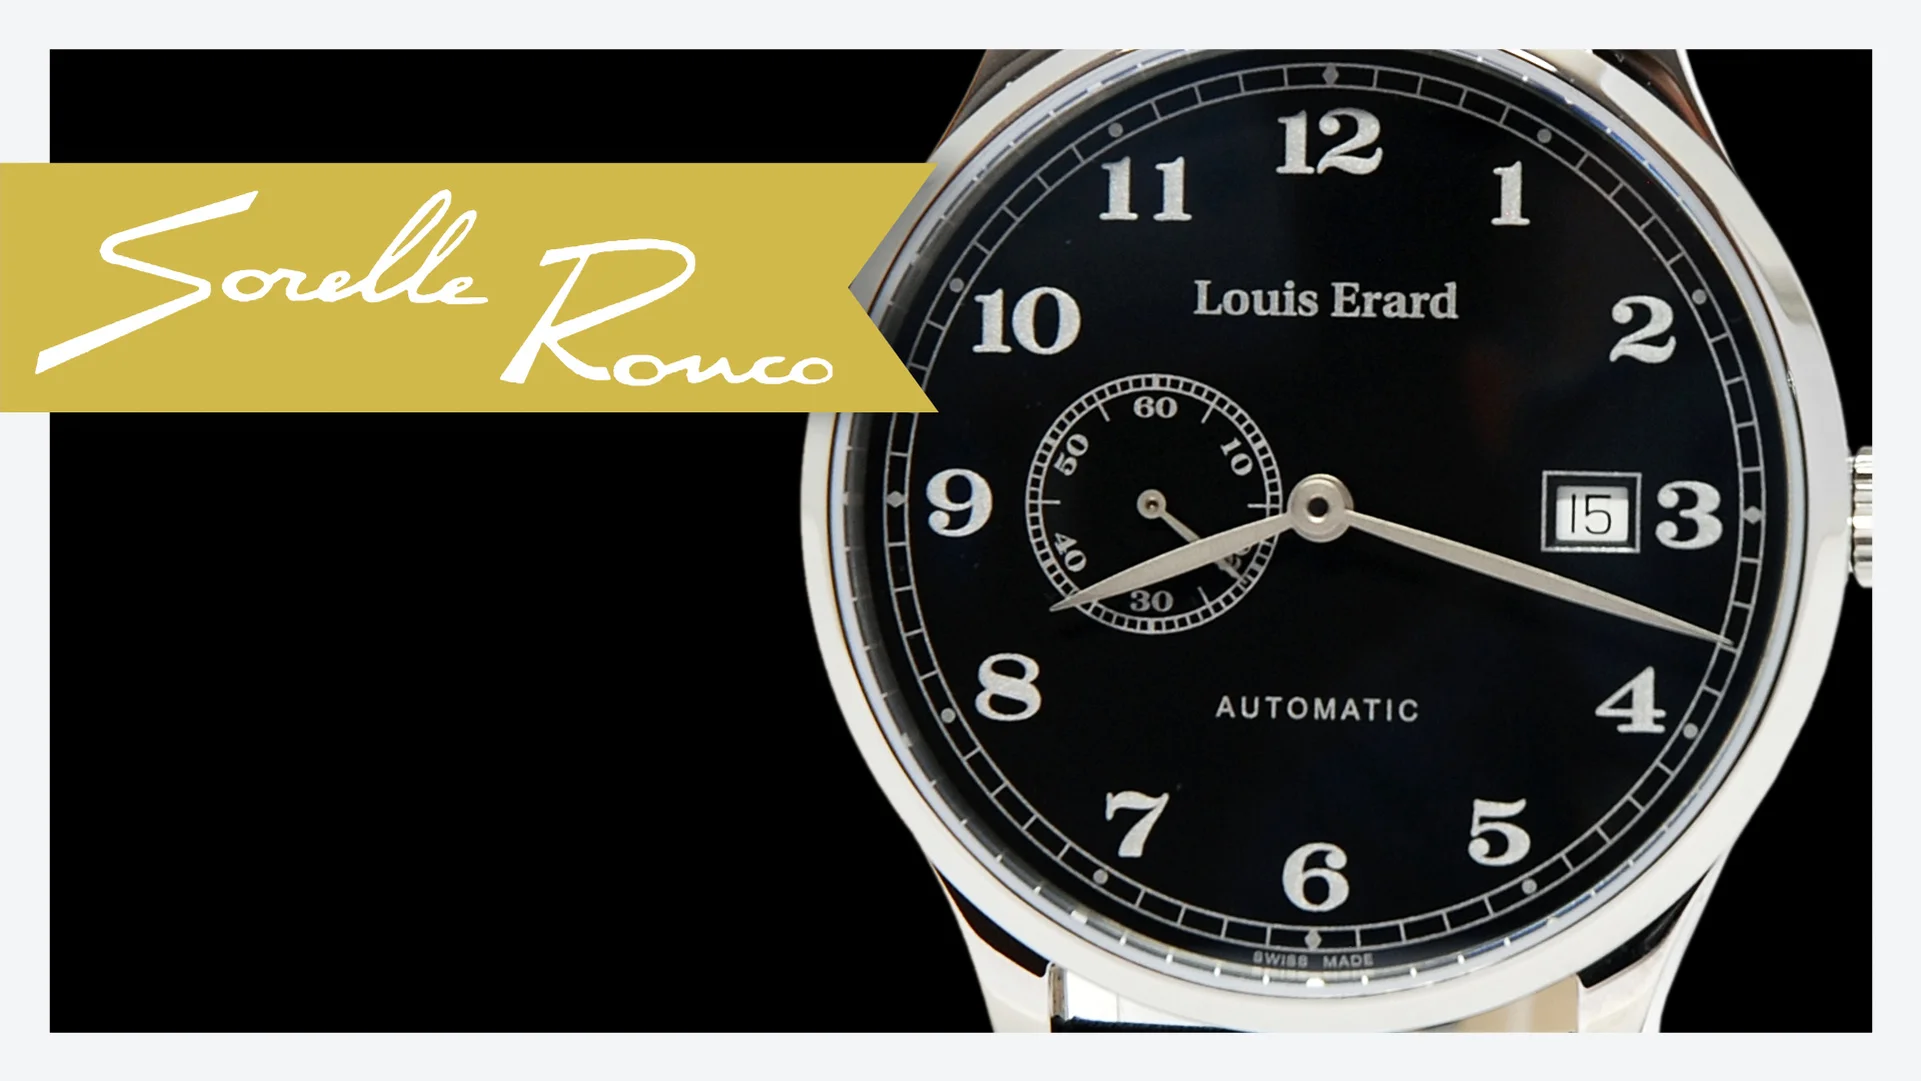 Louis Erard 1931 40 mm Watch in Silver Dial